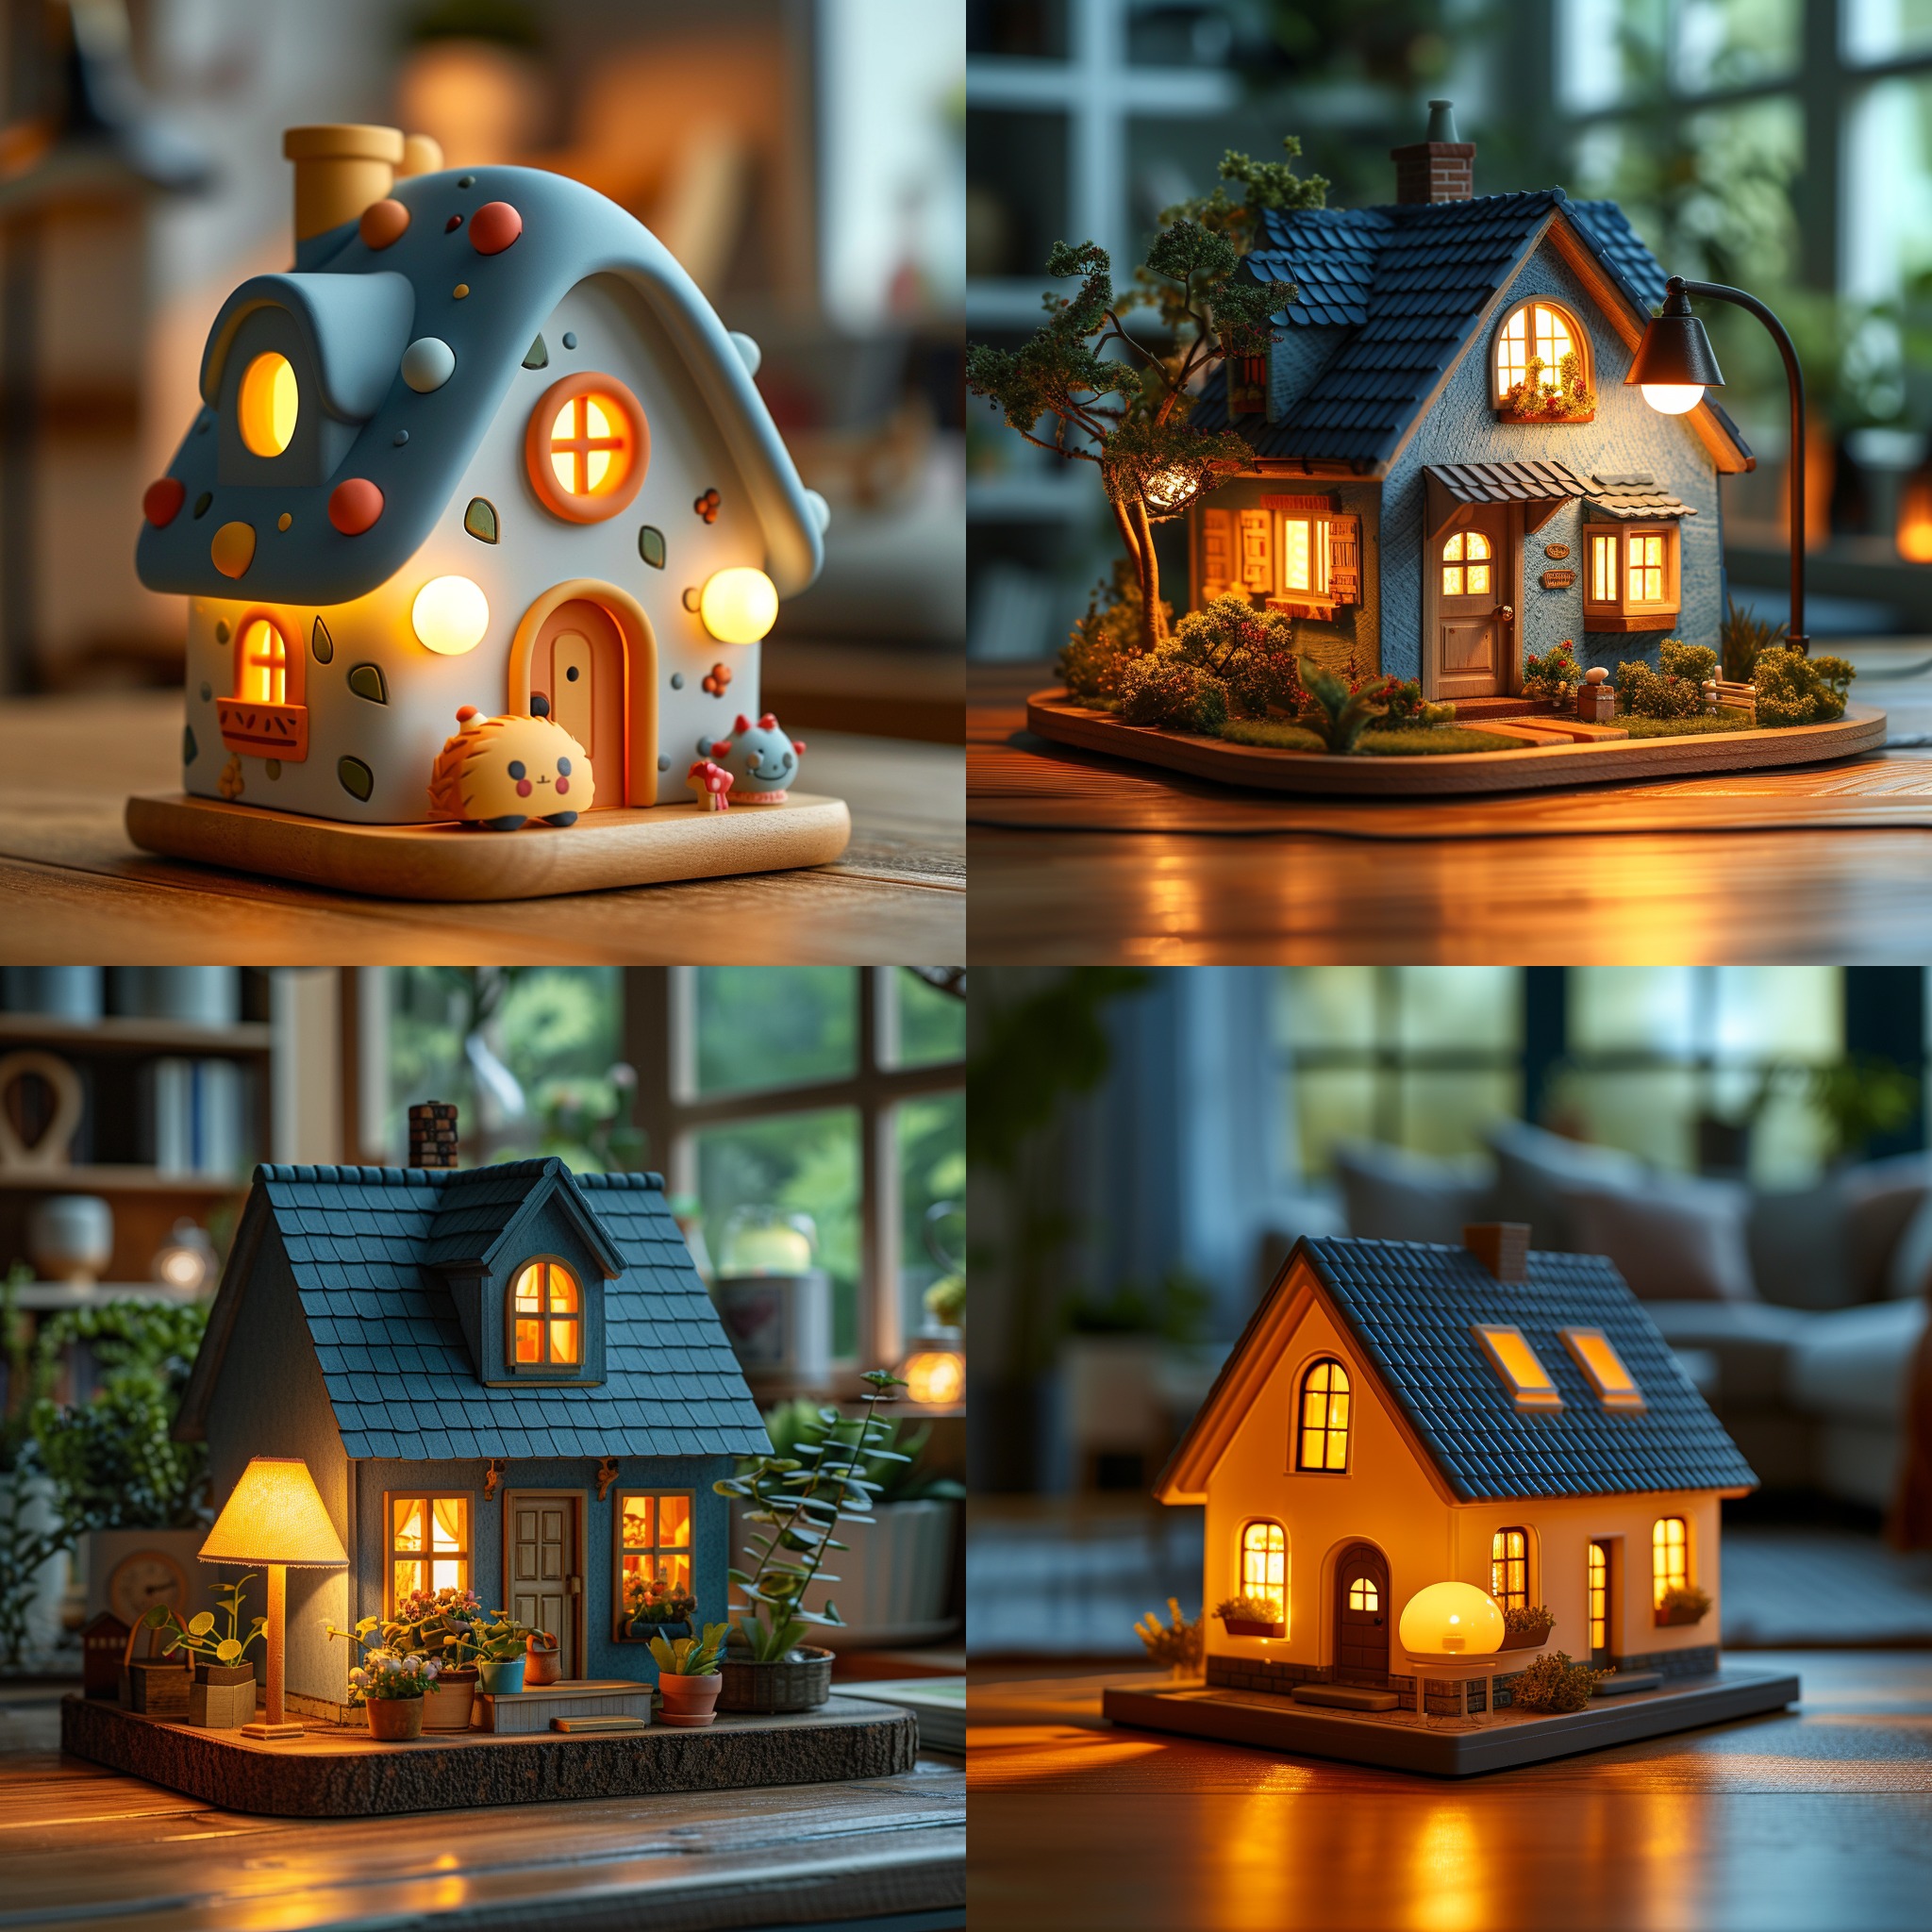 toy house on desk lamp light on –v 6.0 –s 750 –style raw